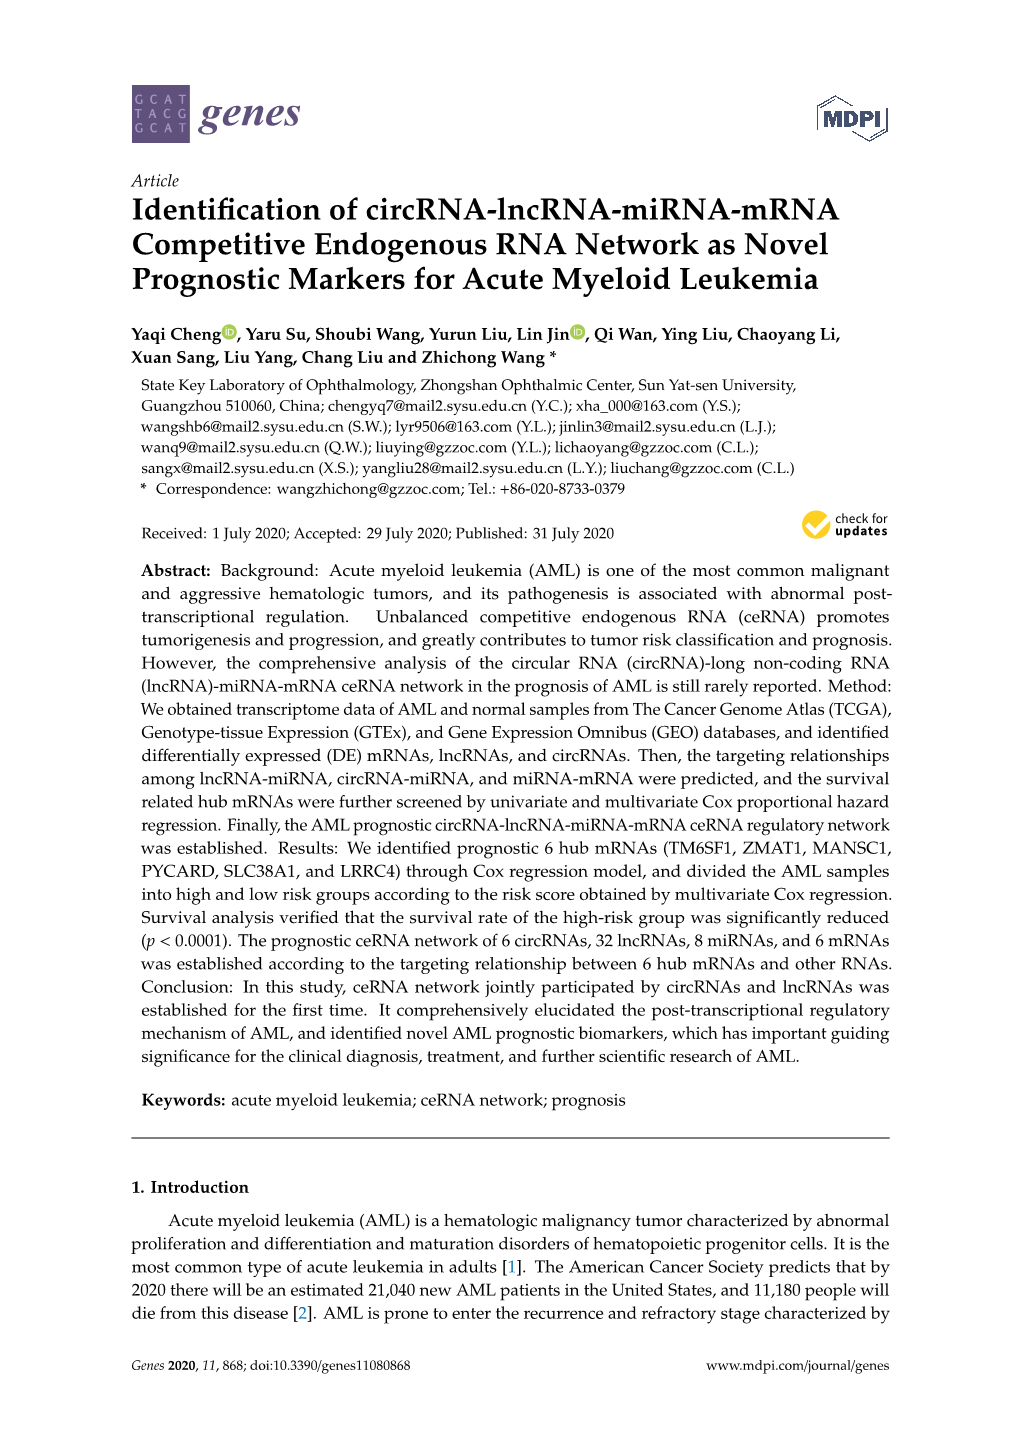 Identification of Circrna-Lncrna-Mirna-Mrna Competitive Endogenous RNA Network As Novel Prognostic Markers for Acute Myeloid Leukemia